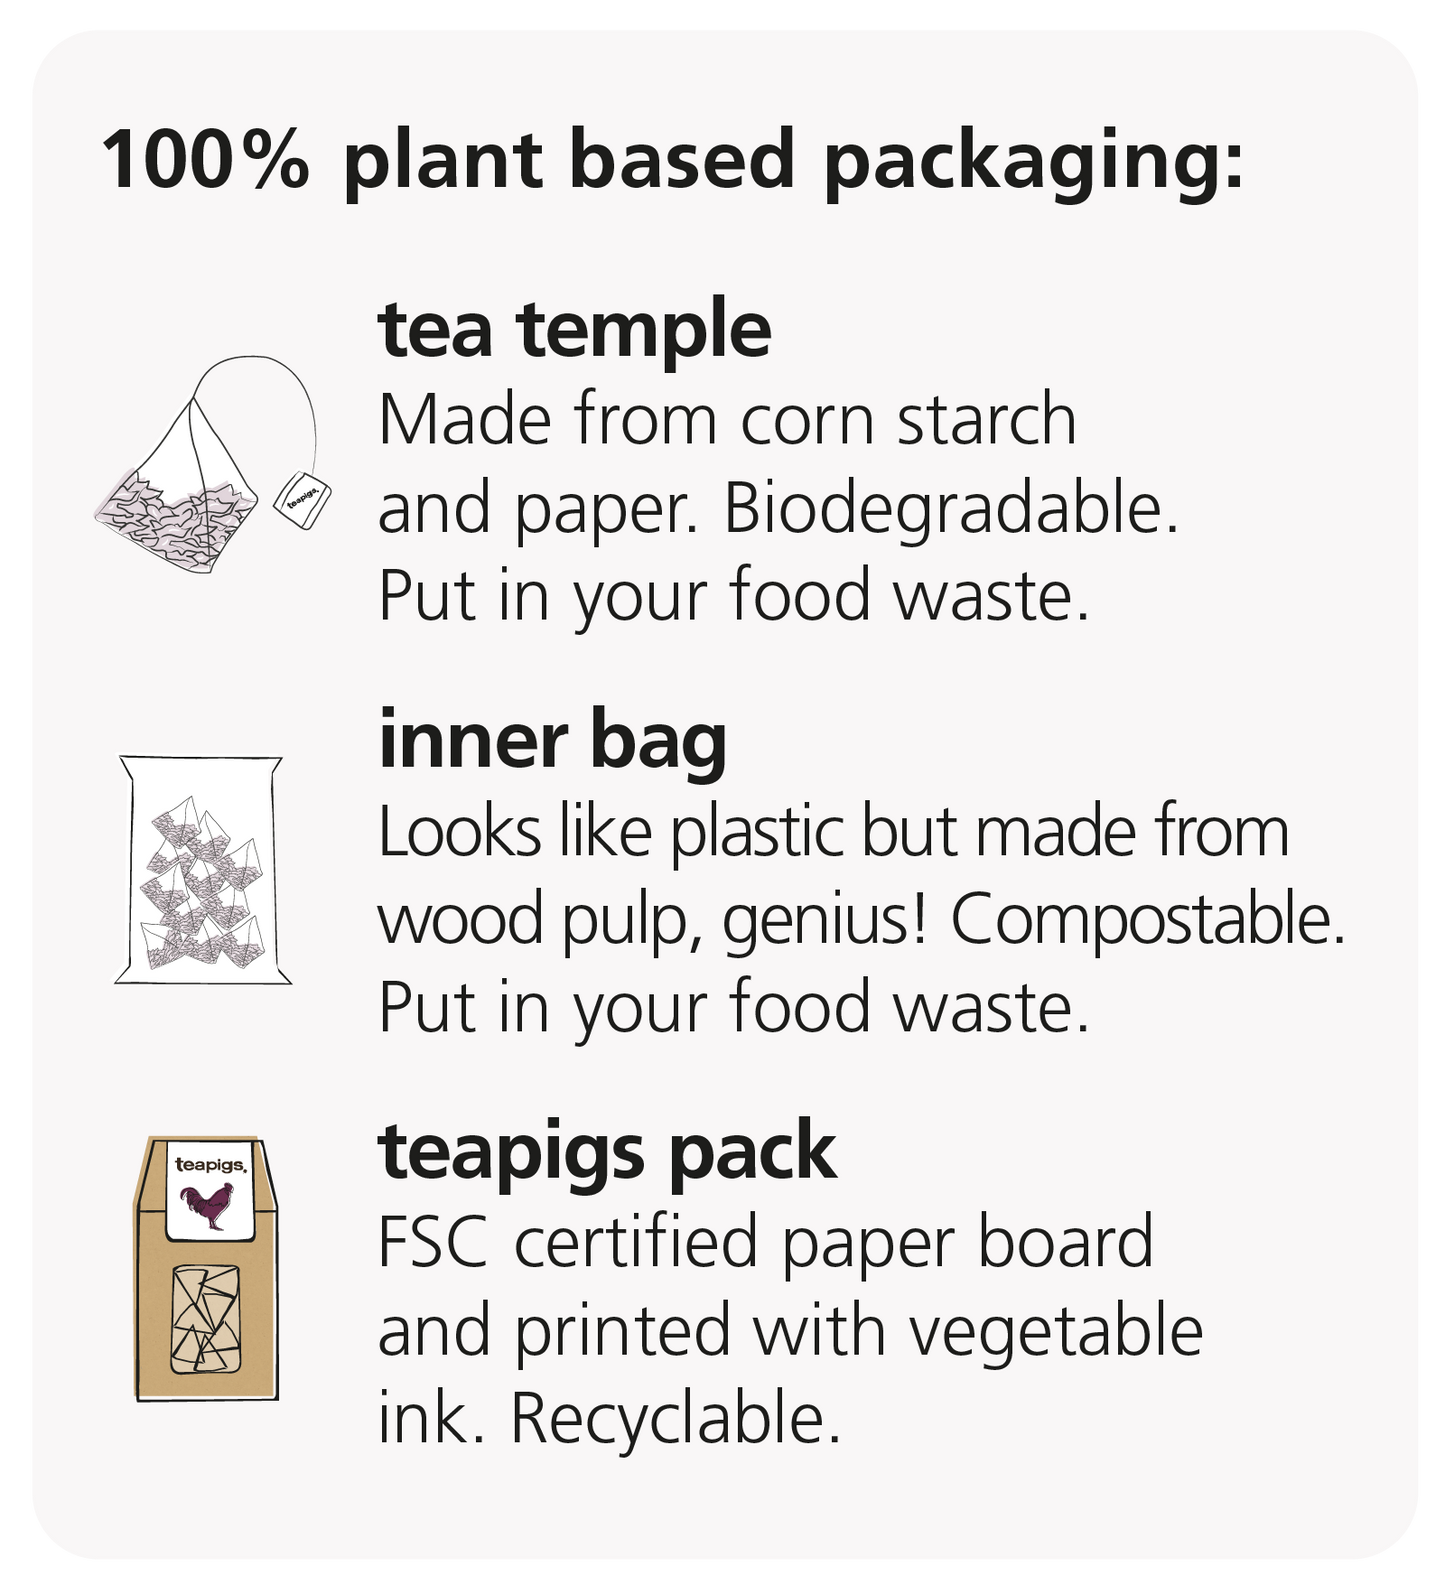 teapigs affaldssortings guide